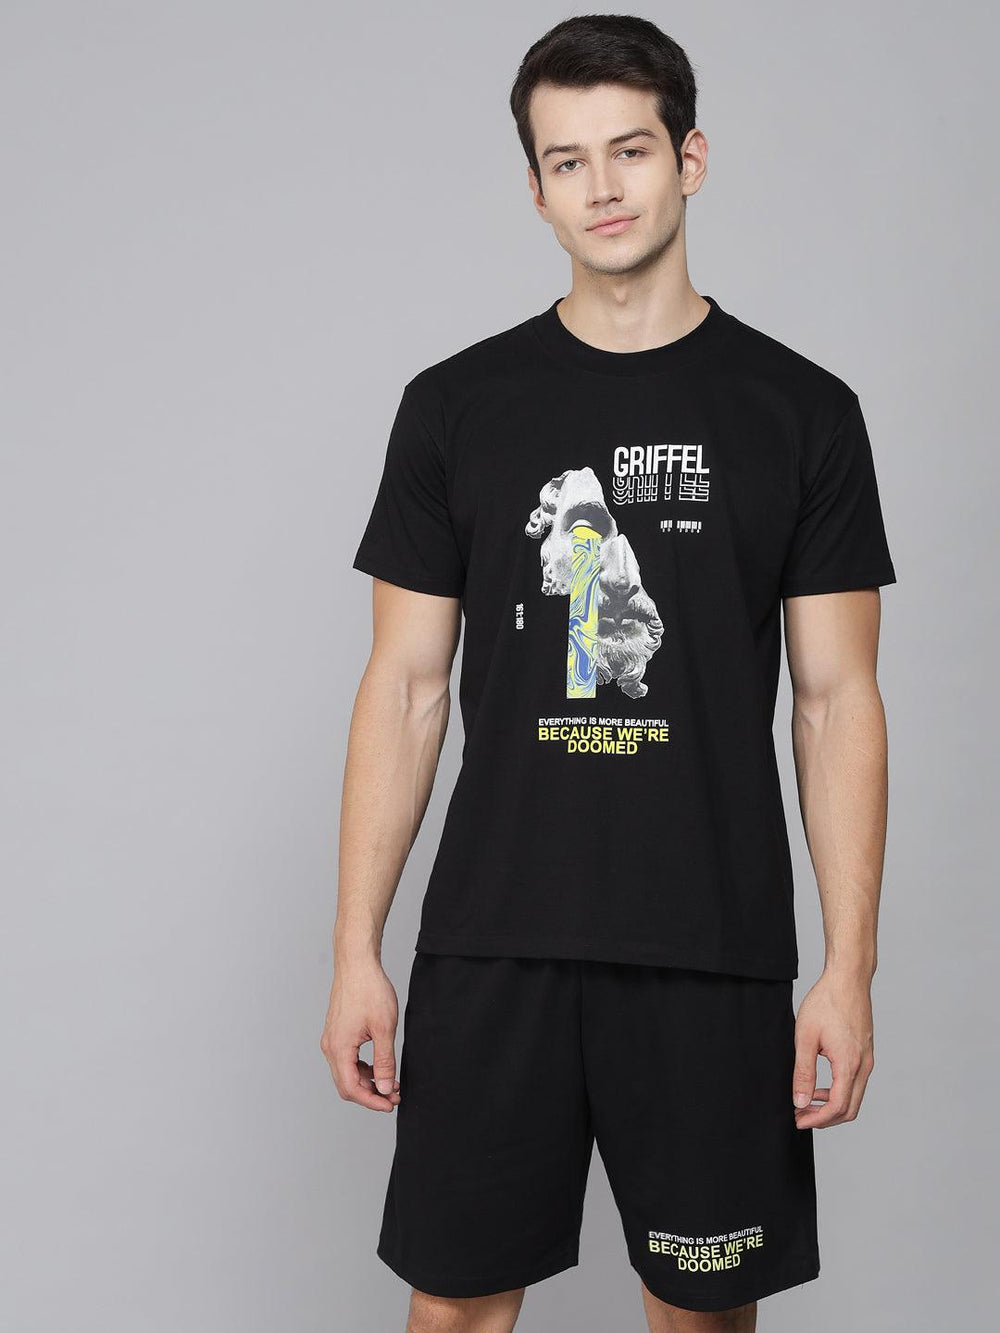 GRIFFEL Men Printed Black Regular fit T-shirt and Short Set - griffel